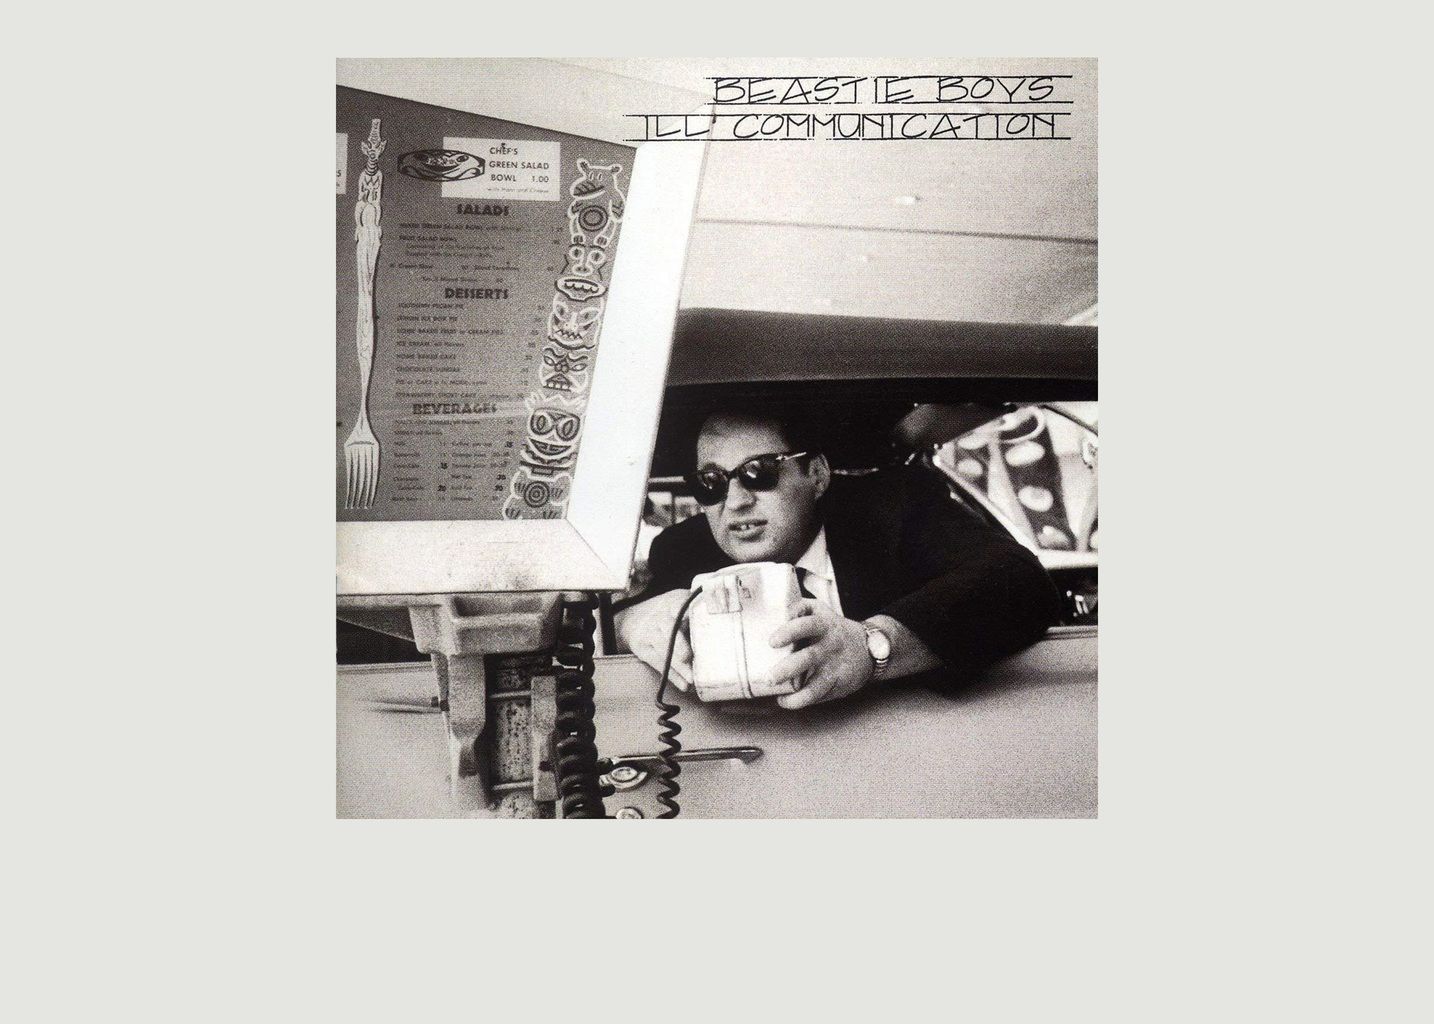 Ill Kommunikation - Beastie Boys - La vinyl-thèque idéale